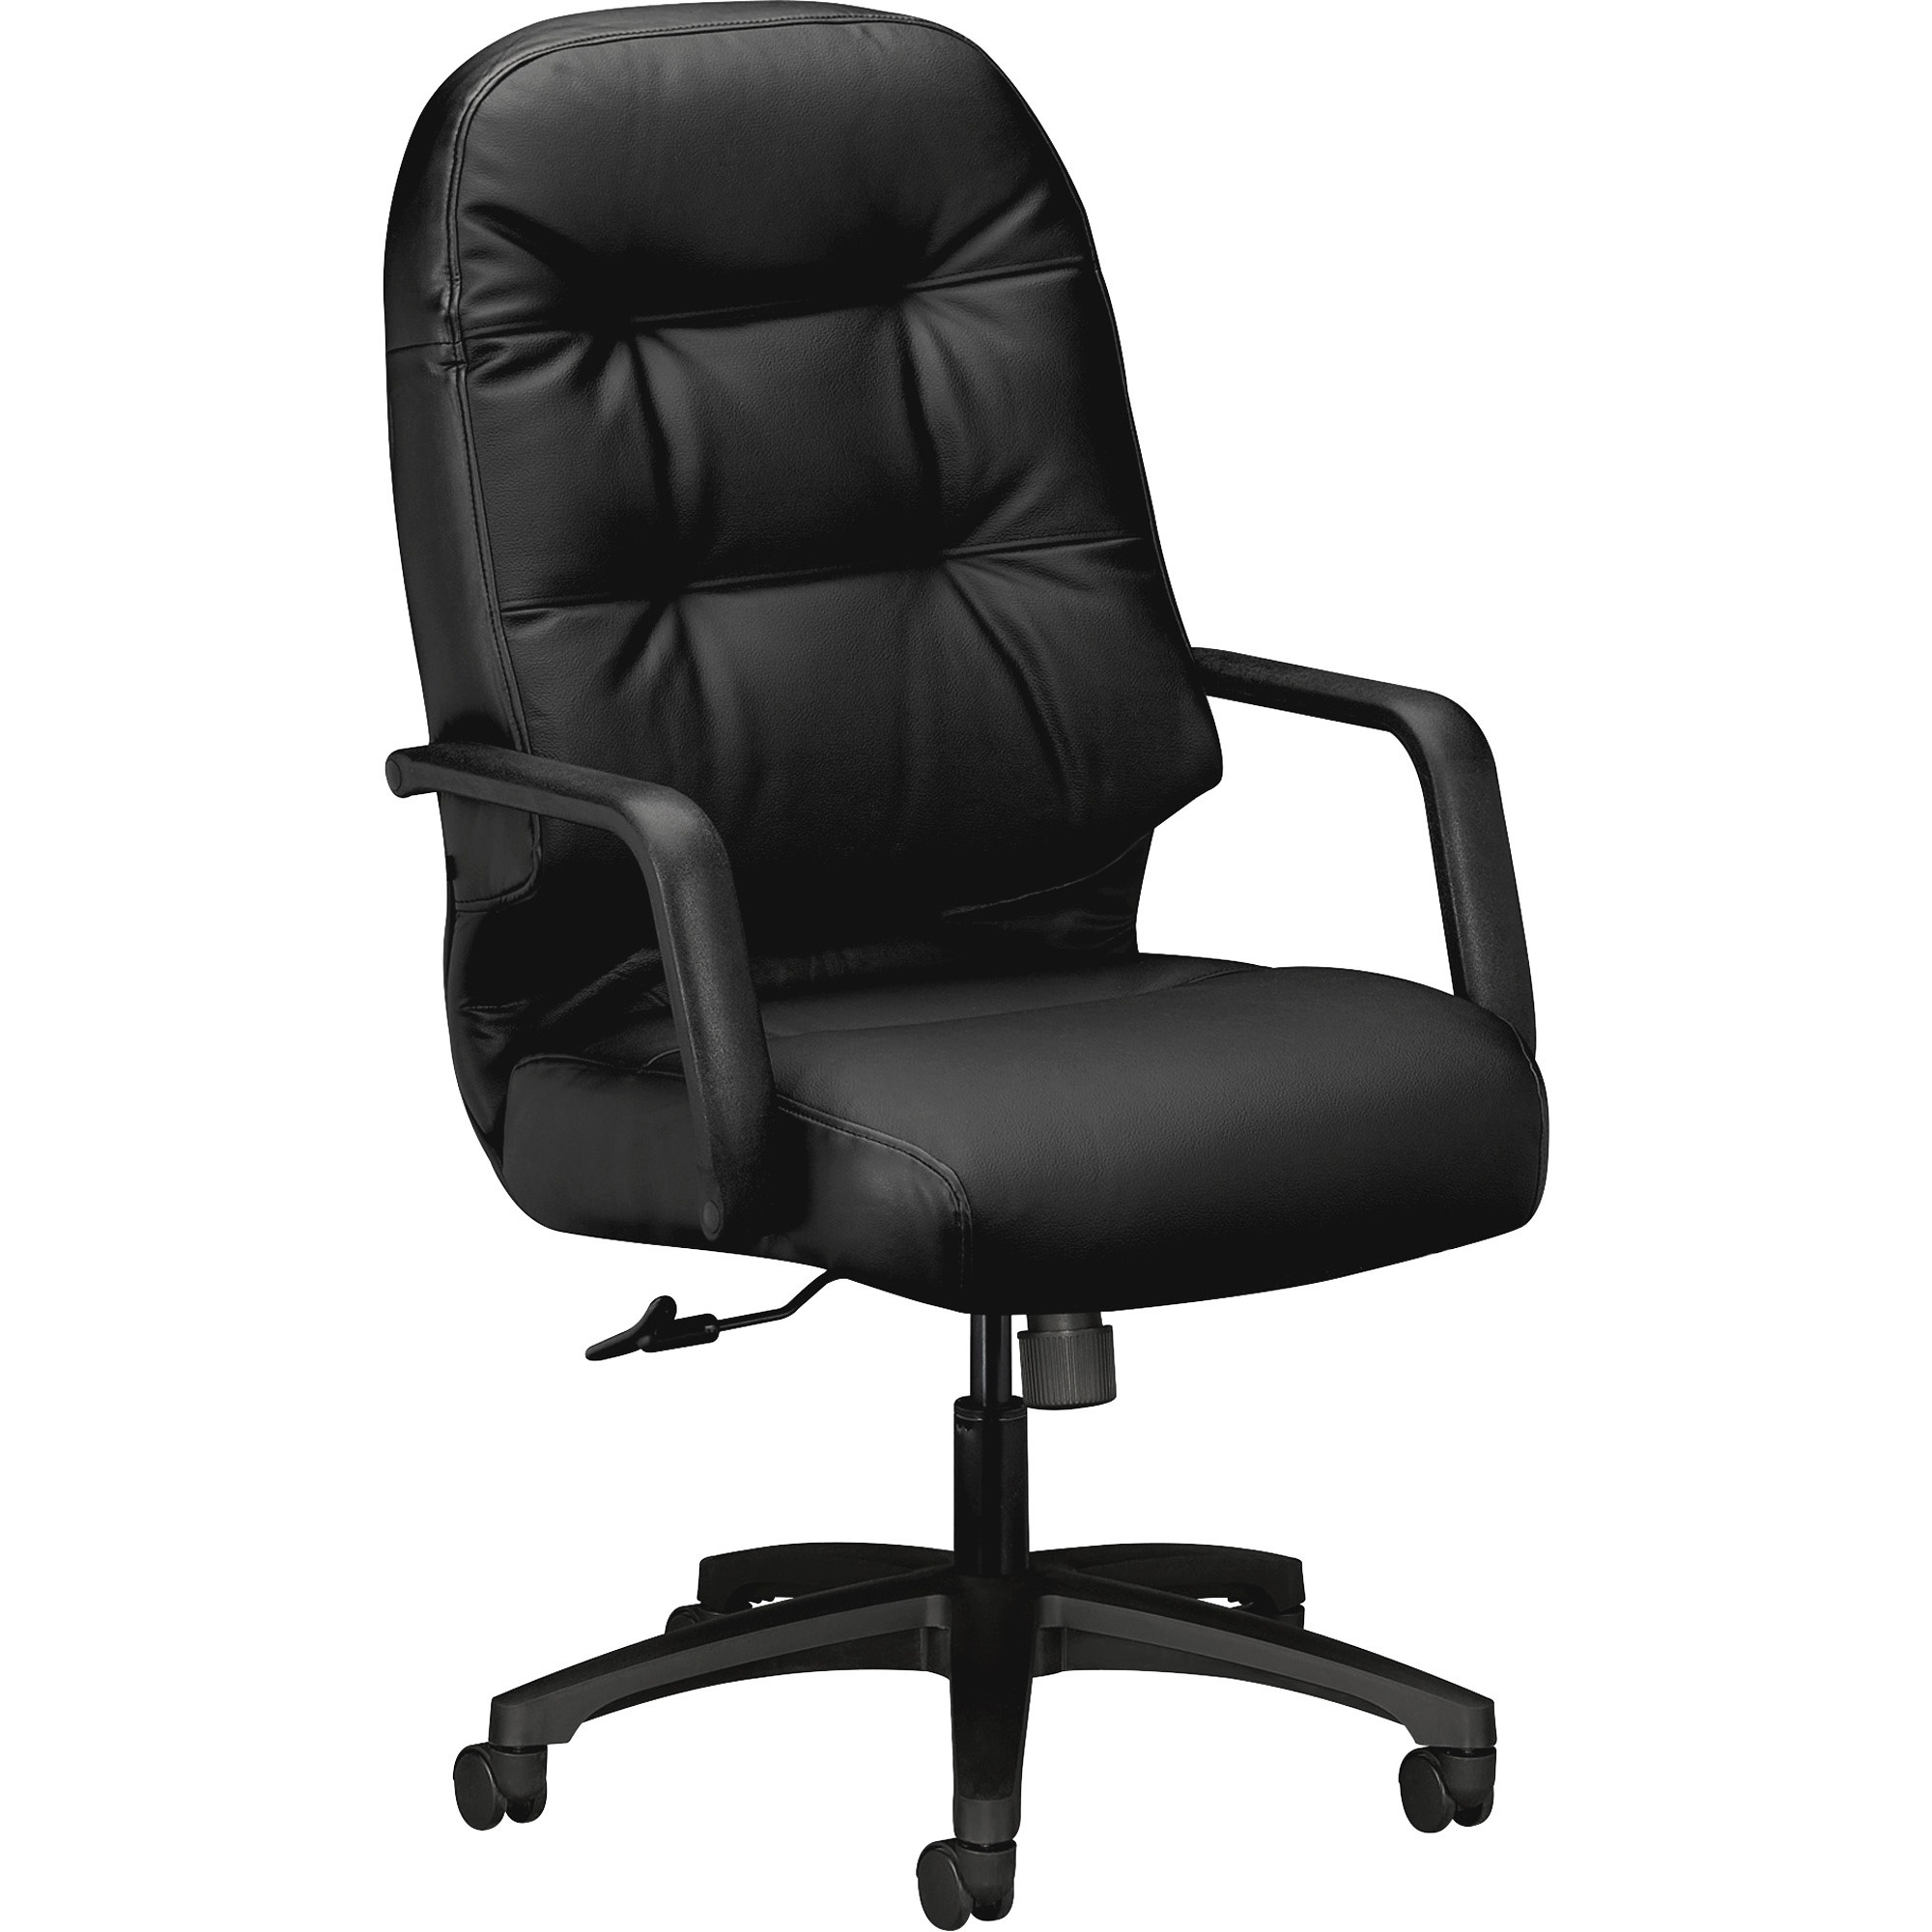 West Coast Office Supplies :: Furniture :: Chairs, Chair Mats